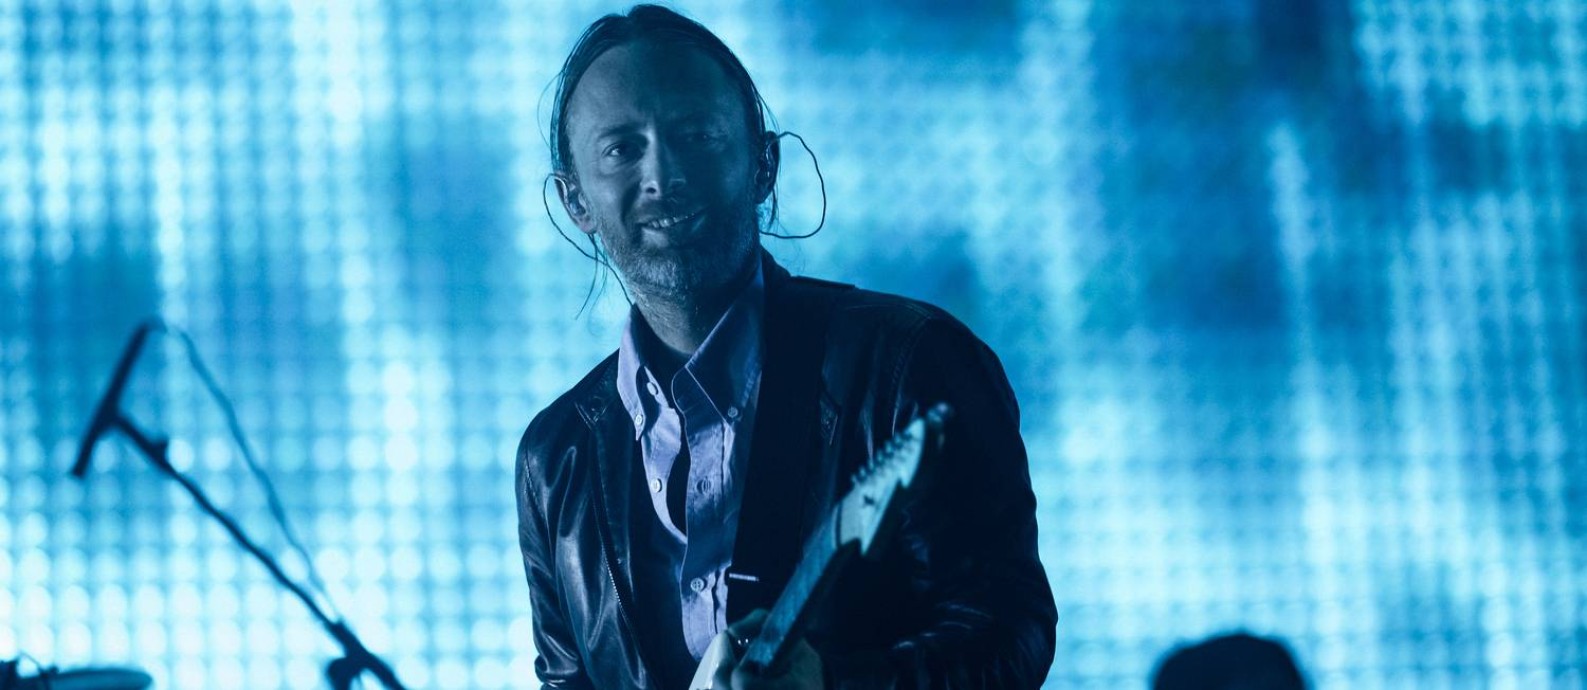 Thom Yorke em show do Radiohead, em 2012 Foto: CHAD BATKA / NYT